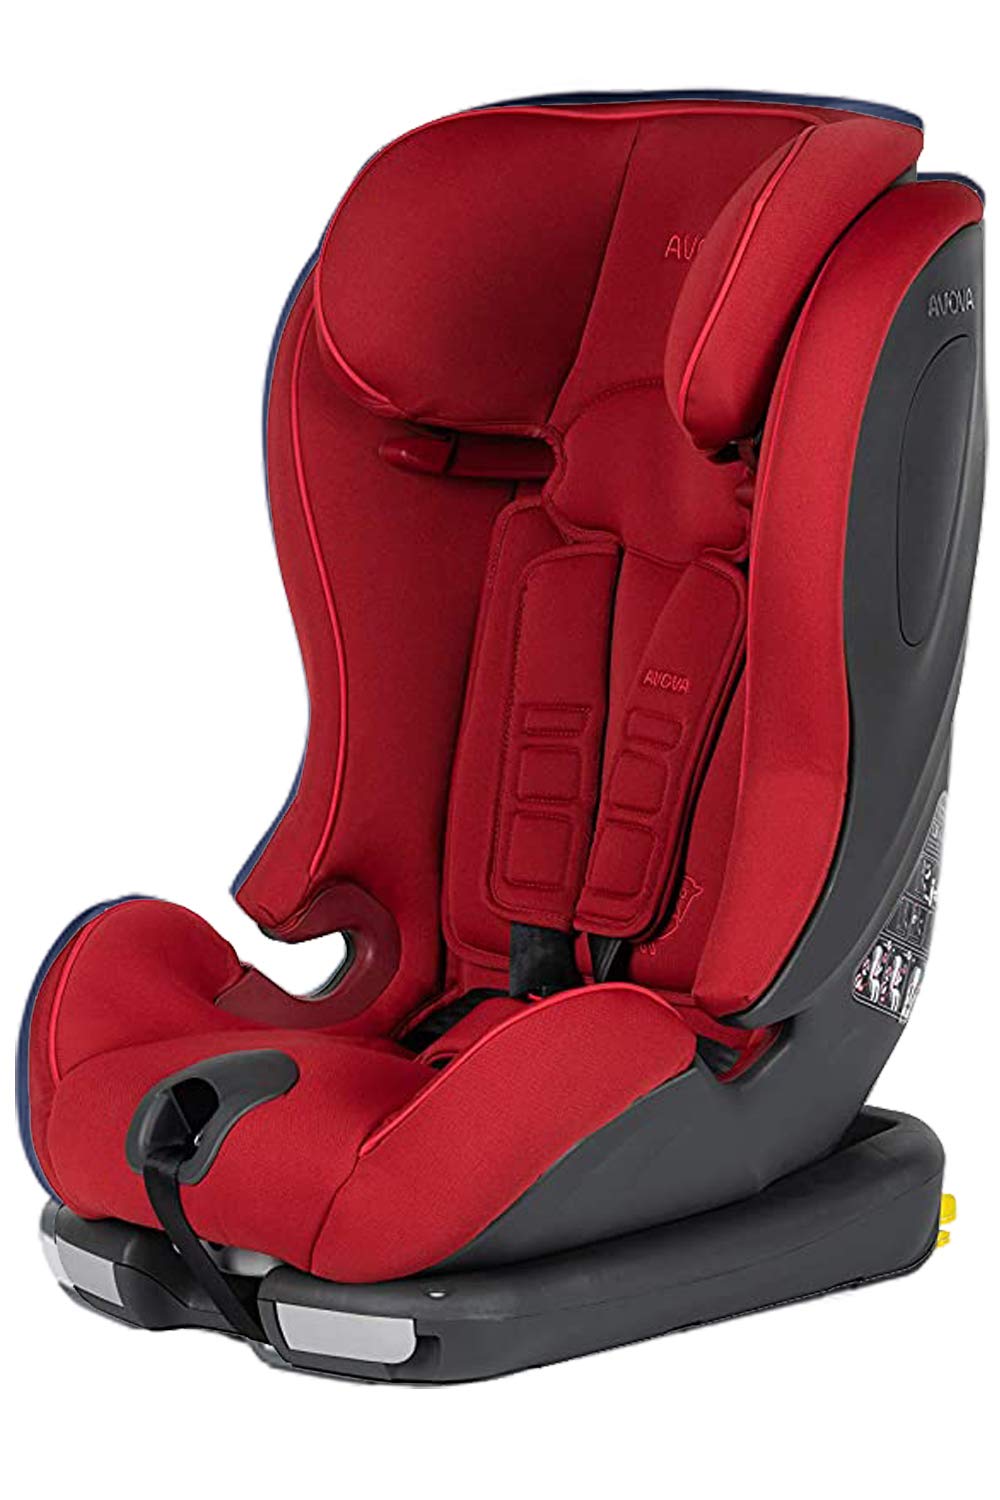 Avova Child Seat For 76-150 Cm Sperling-Fix I-Size Child Car Seat Isofix R1